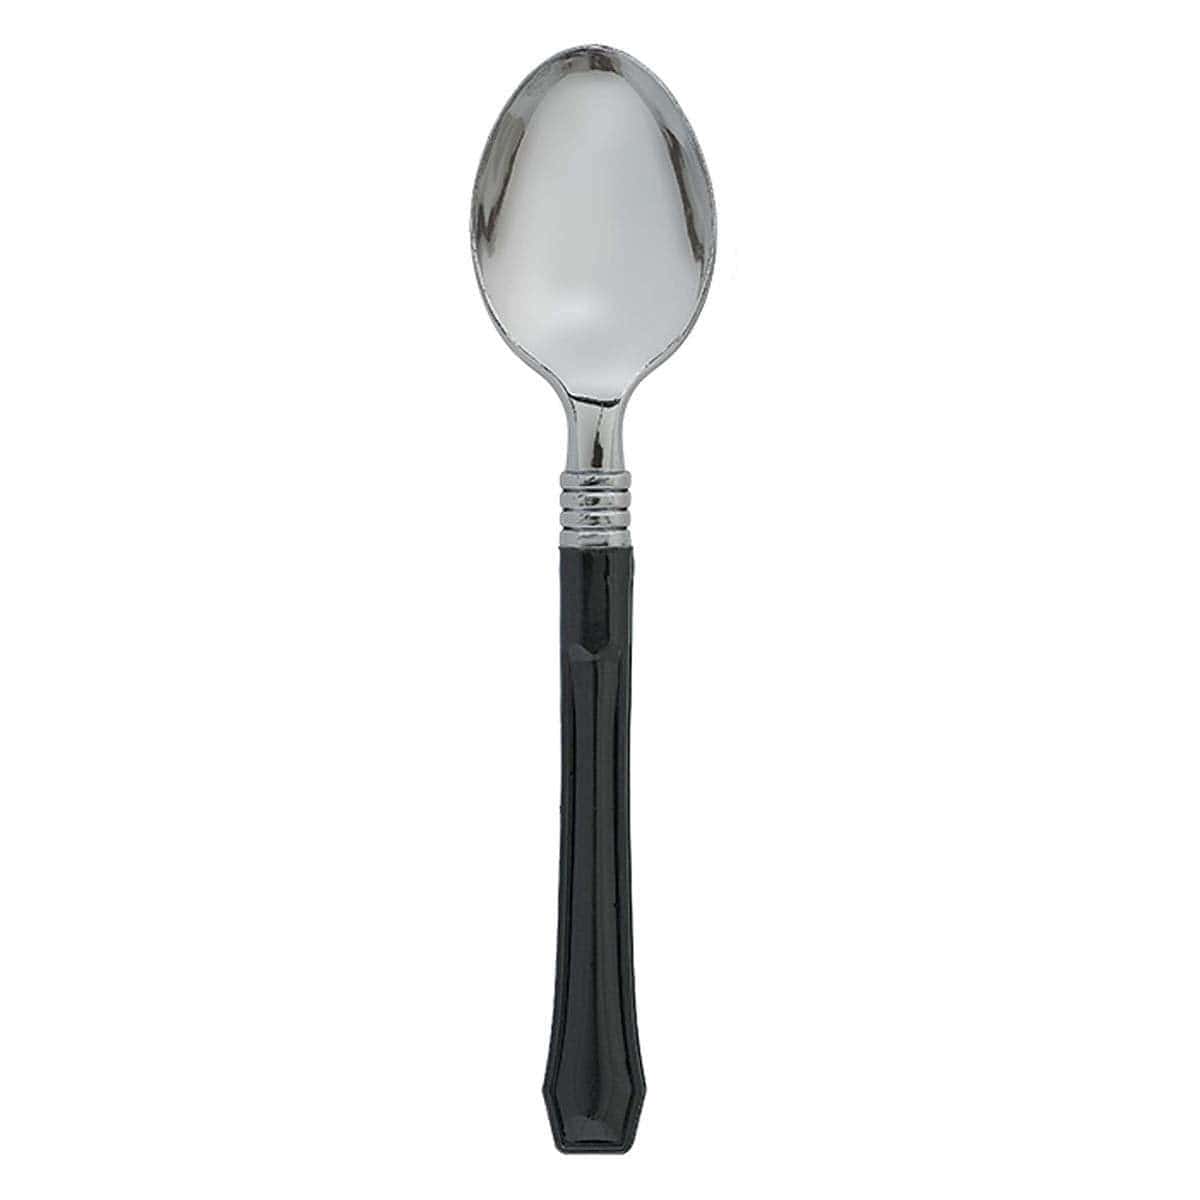 Buy Plasticware Spoons Premium 20/pkg. - Jet Black sold at Party Expert